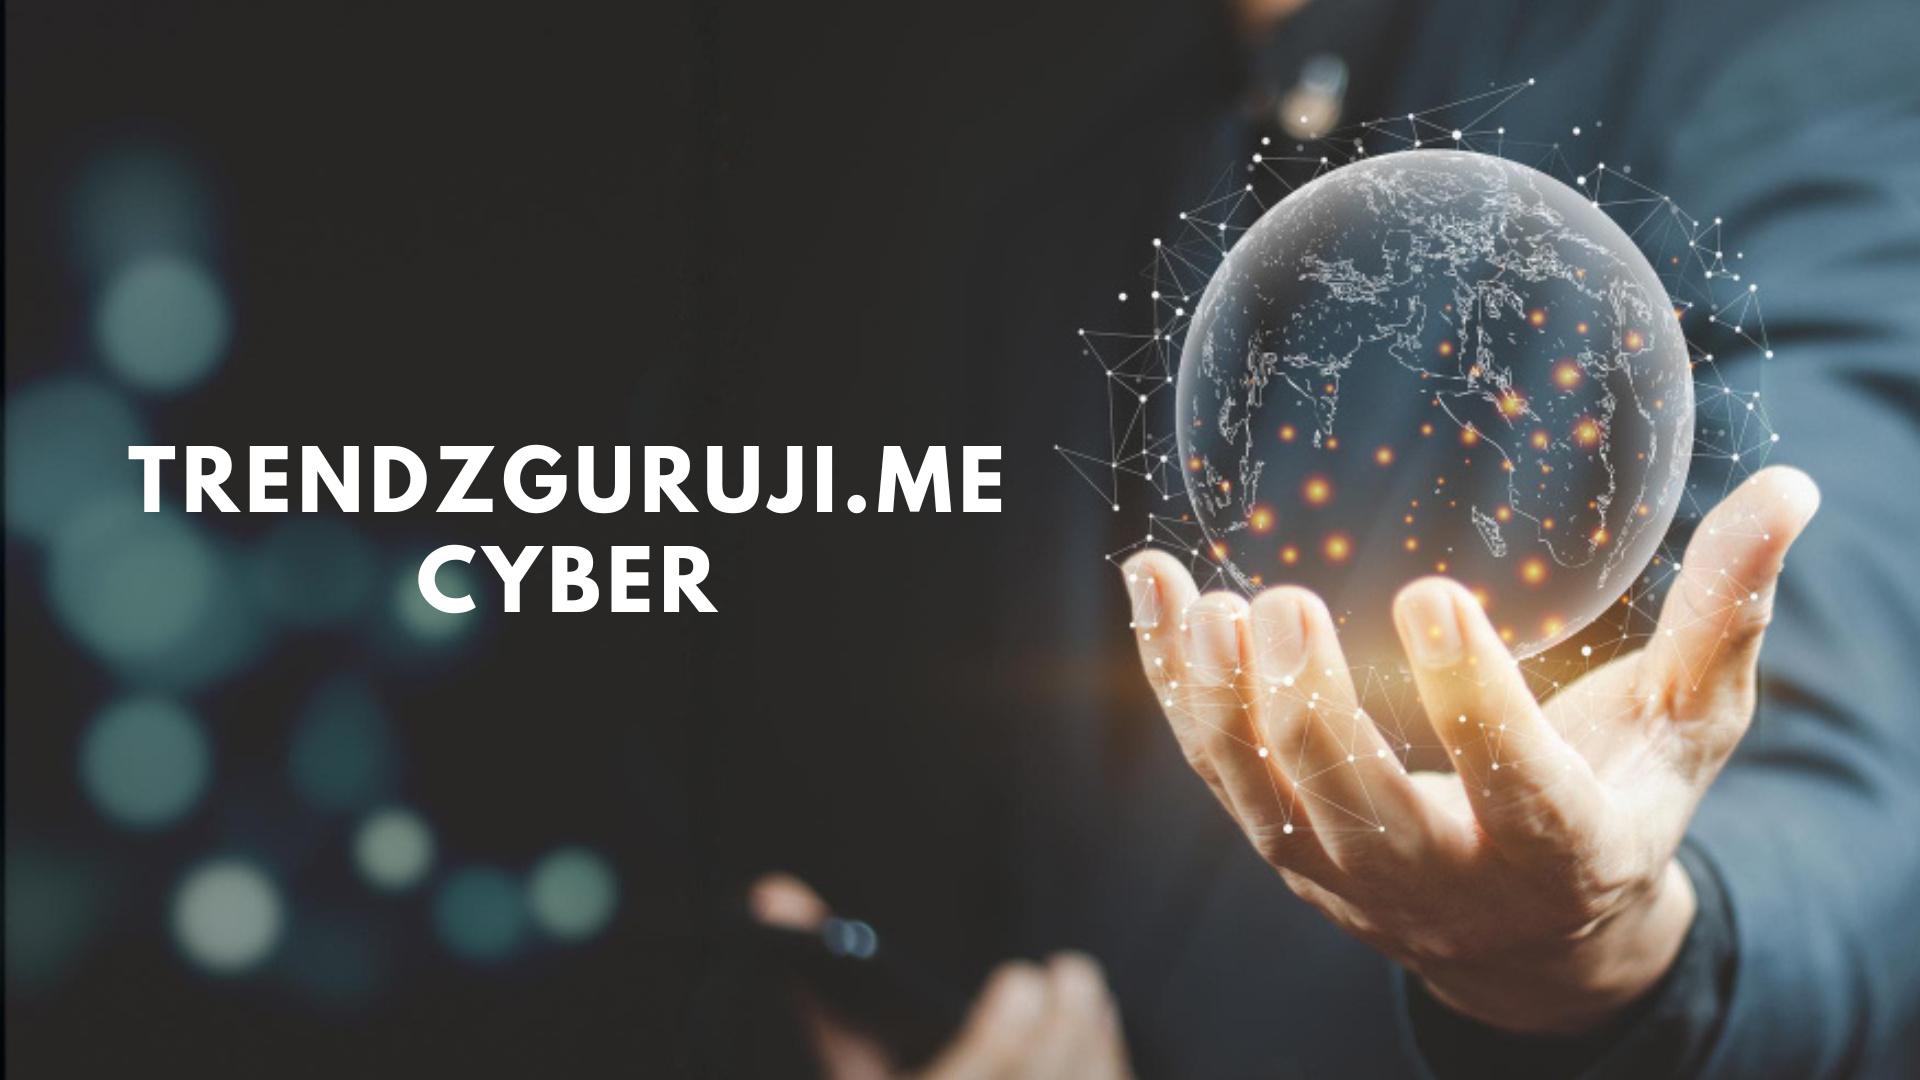 Trendzguruji.me Cyber: A Cyber security platform for the world